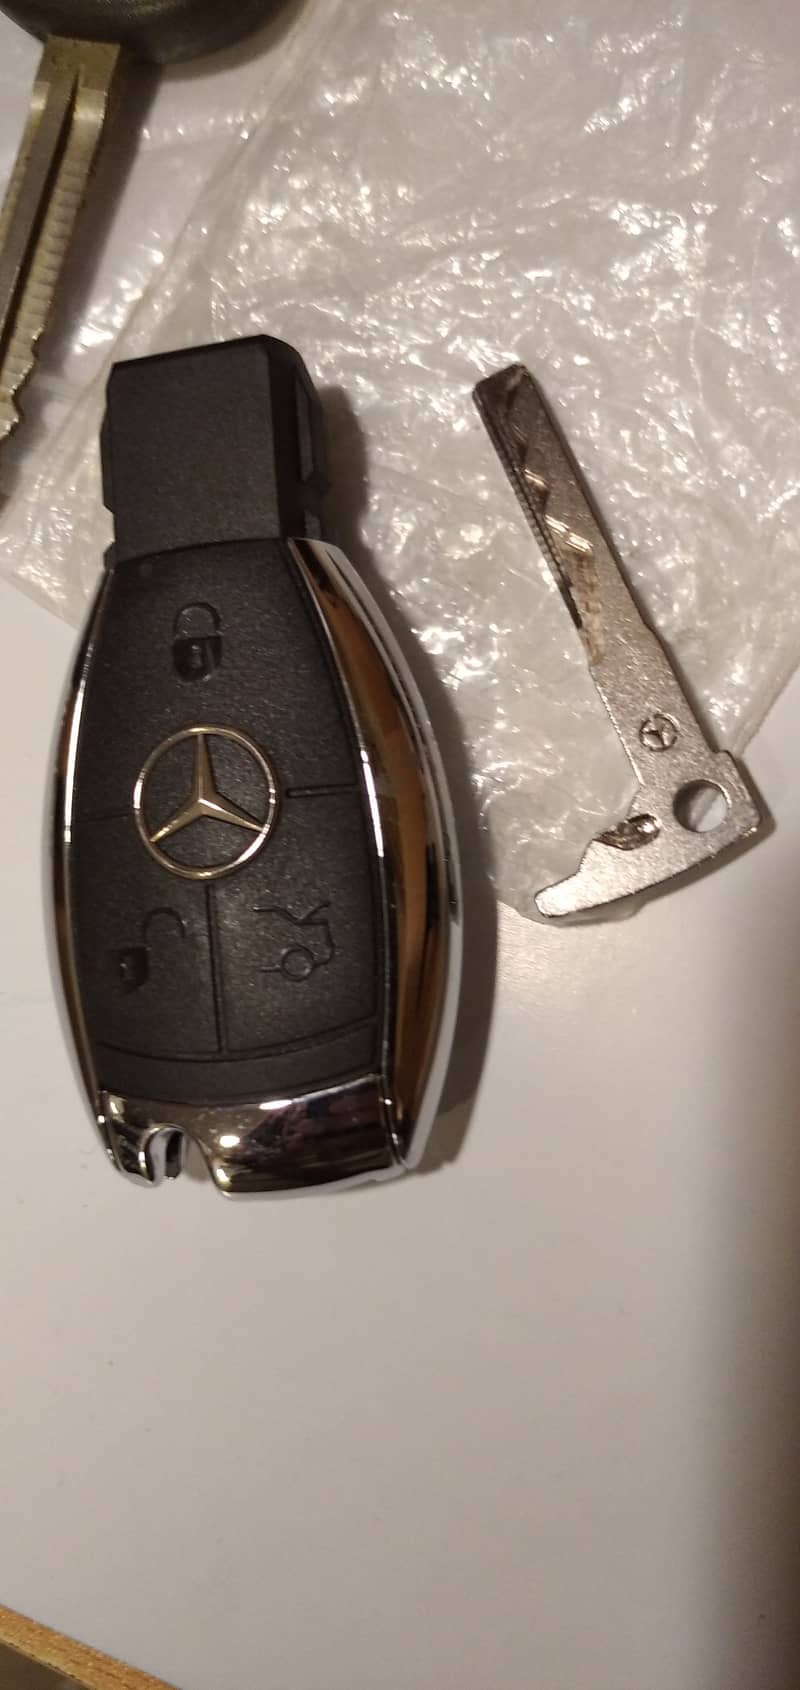 Mercedes Benz Original New Remote with key 2